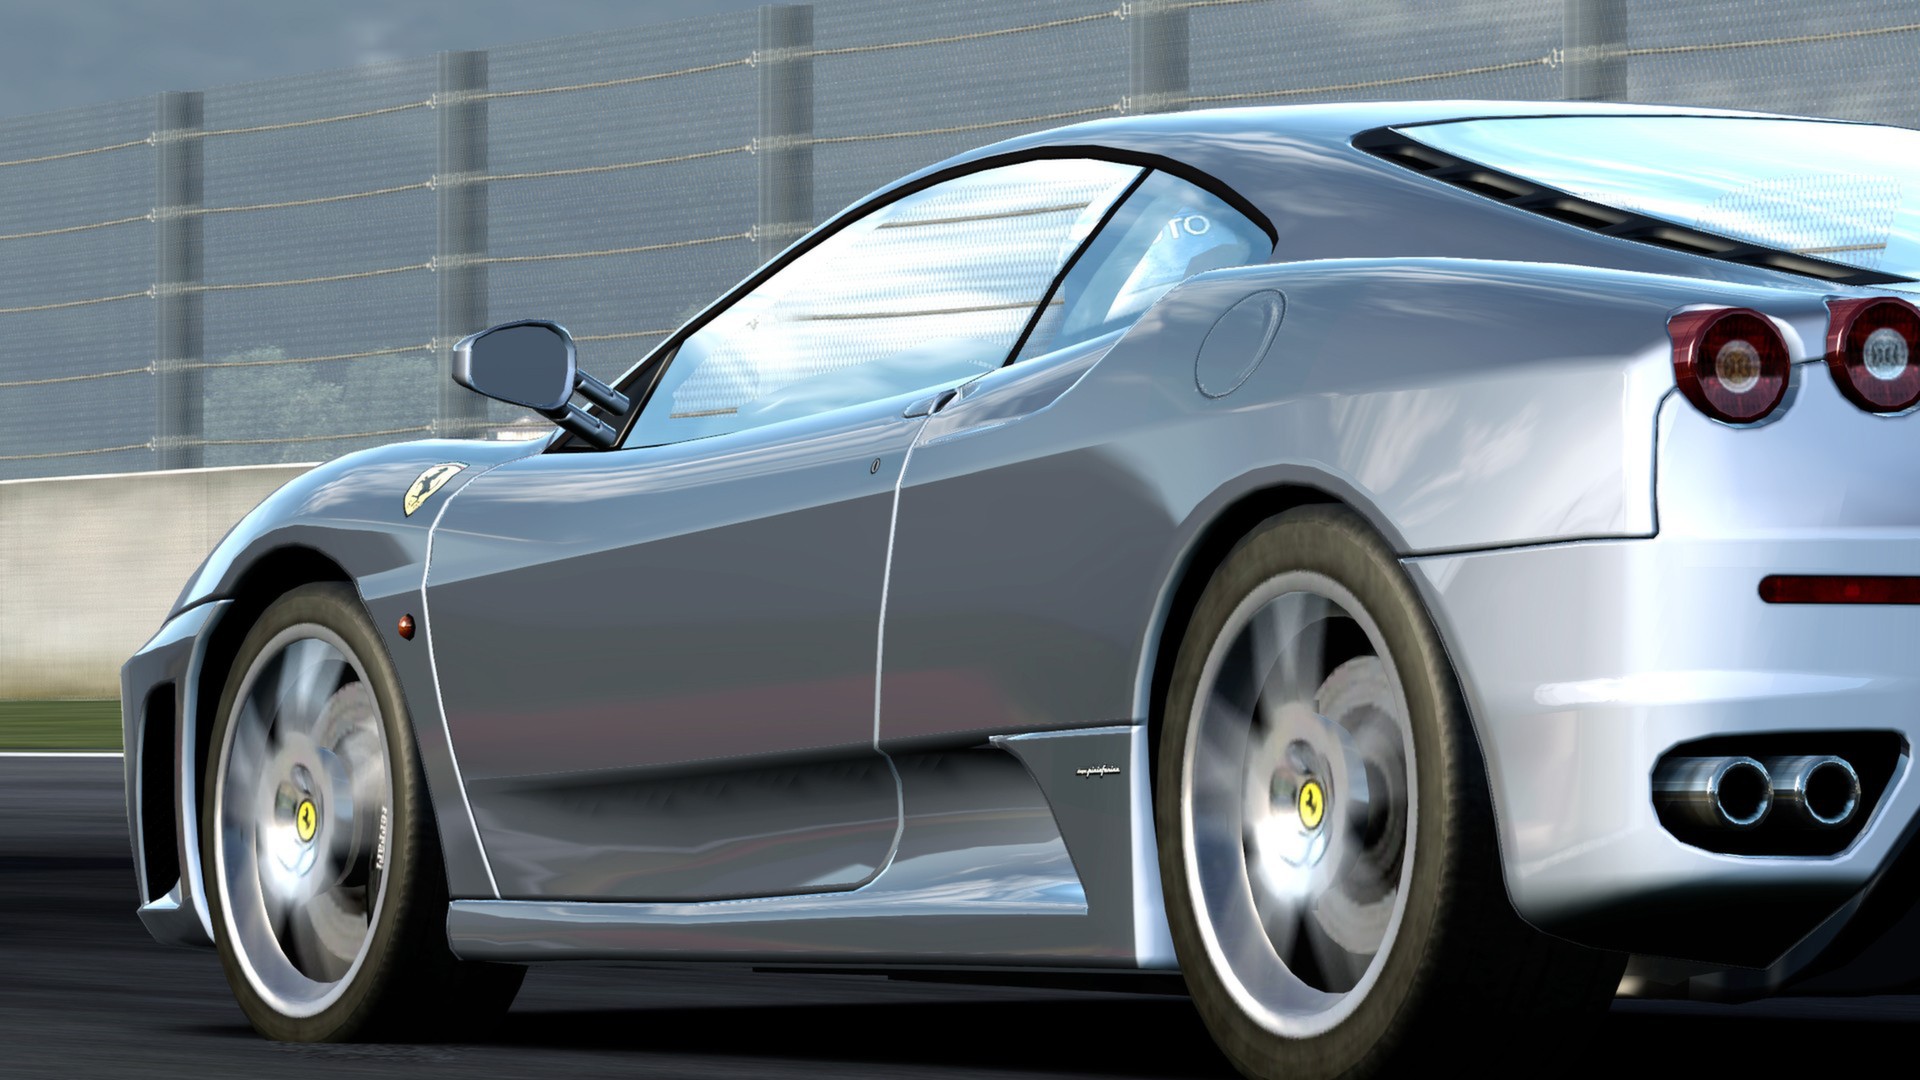 Ferrari racing legends. Test Drive: Ferrari Racing Legends. Test Drive Ferrari Racing Legends ps3. Test Drive: Ferrari Racing Legends Xbox 360.